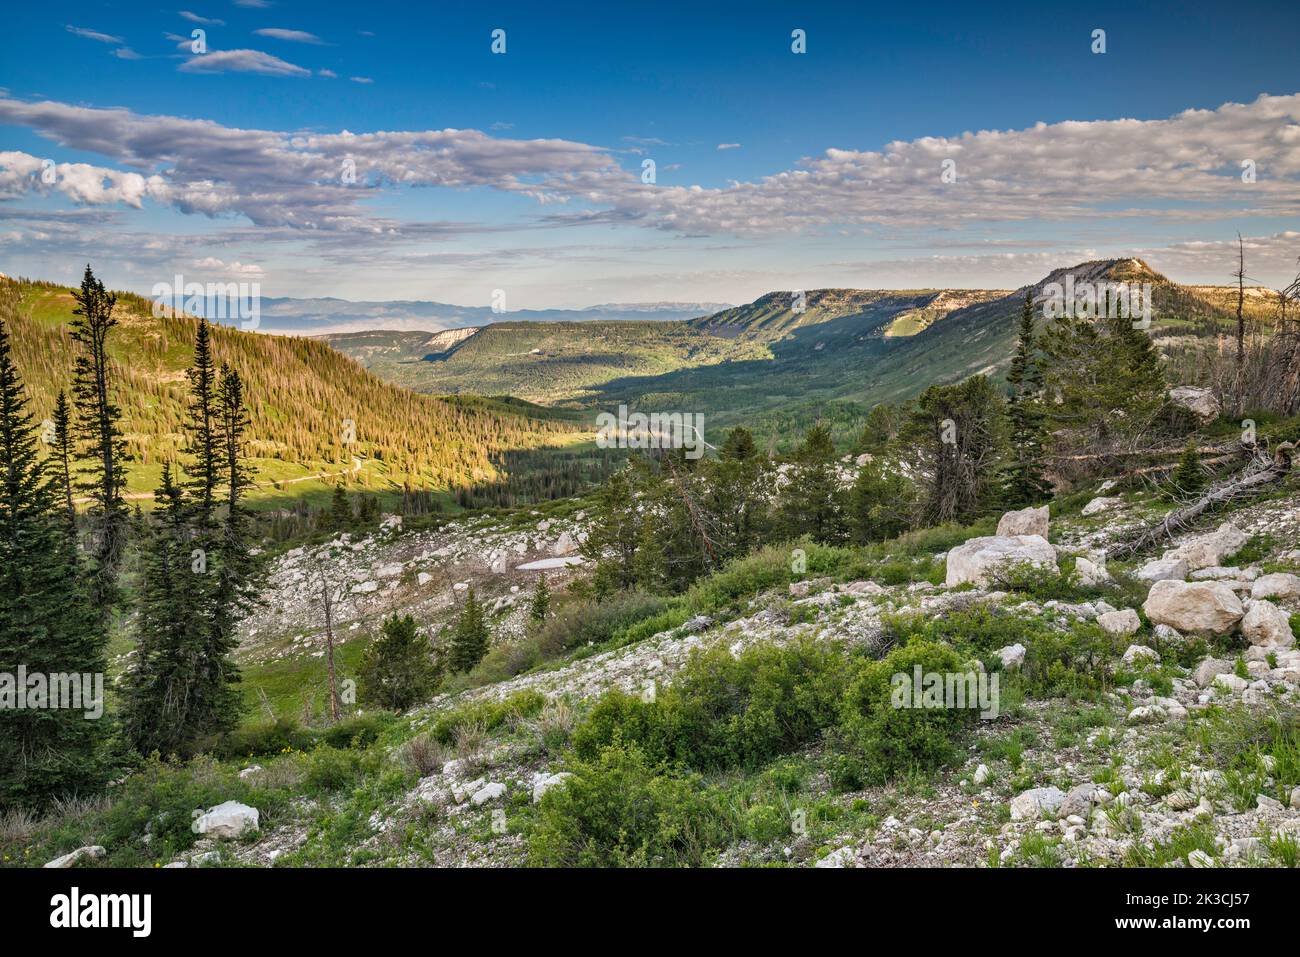 Black Mountain, Hightop sulla destra, oltre il Twelvemile Canyon, vista da Skyline Drive (FR 022), Wasatch Plateau, Manti la SAL National Forest, Utah, USA Foto Stock